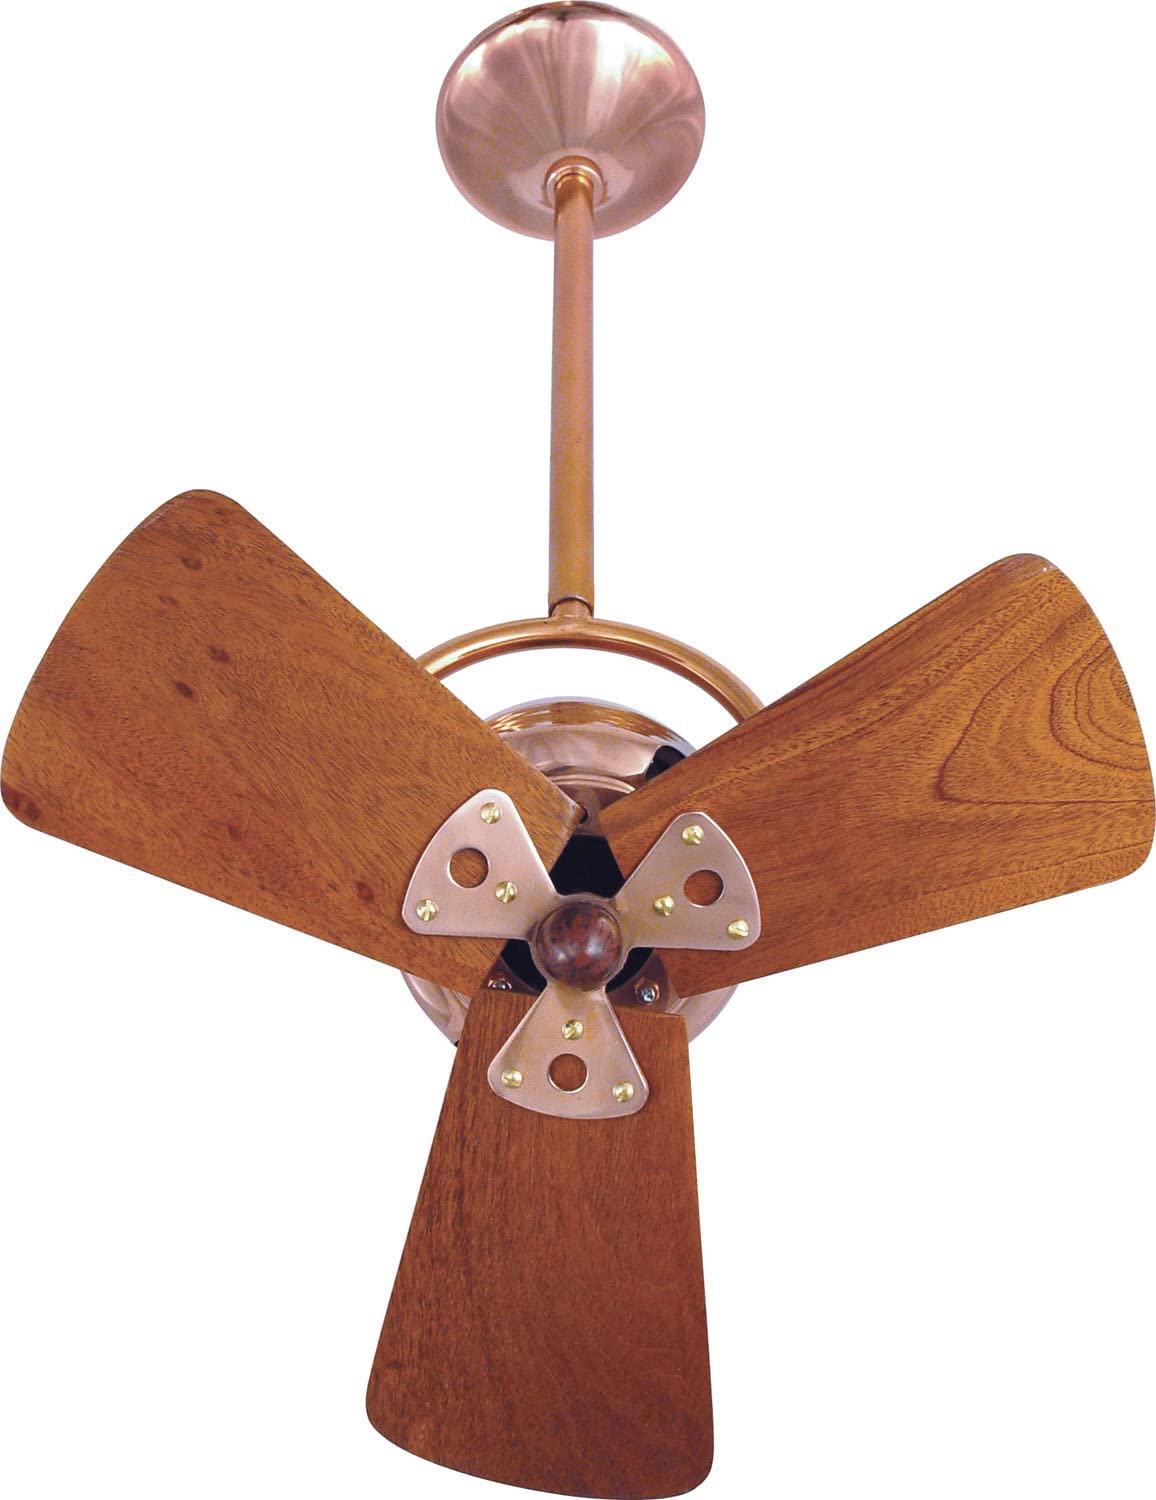 Matthews Fan BD-LTBLUE-WD Bianca Direcional ceiling fan in Agua Marinha (Light Blue) finish with solid sustainable mahogany wood blades.